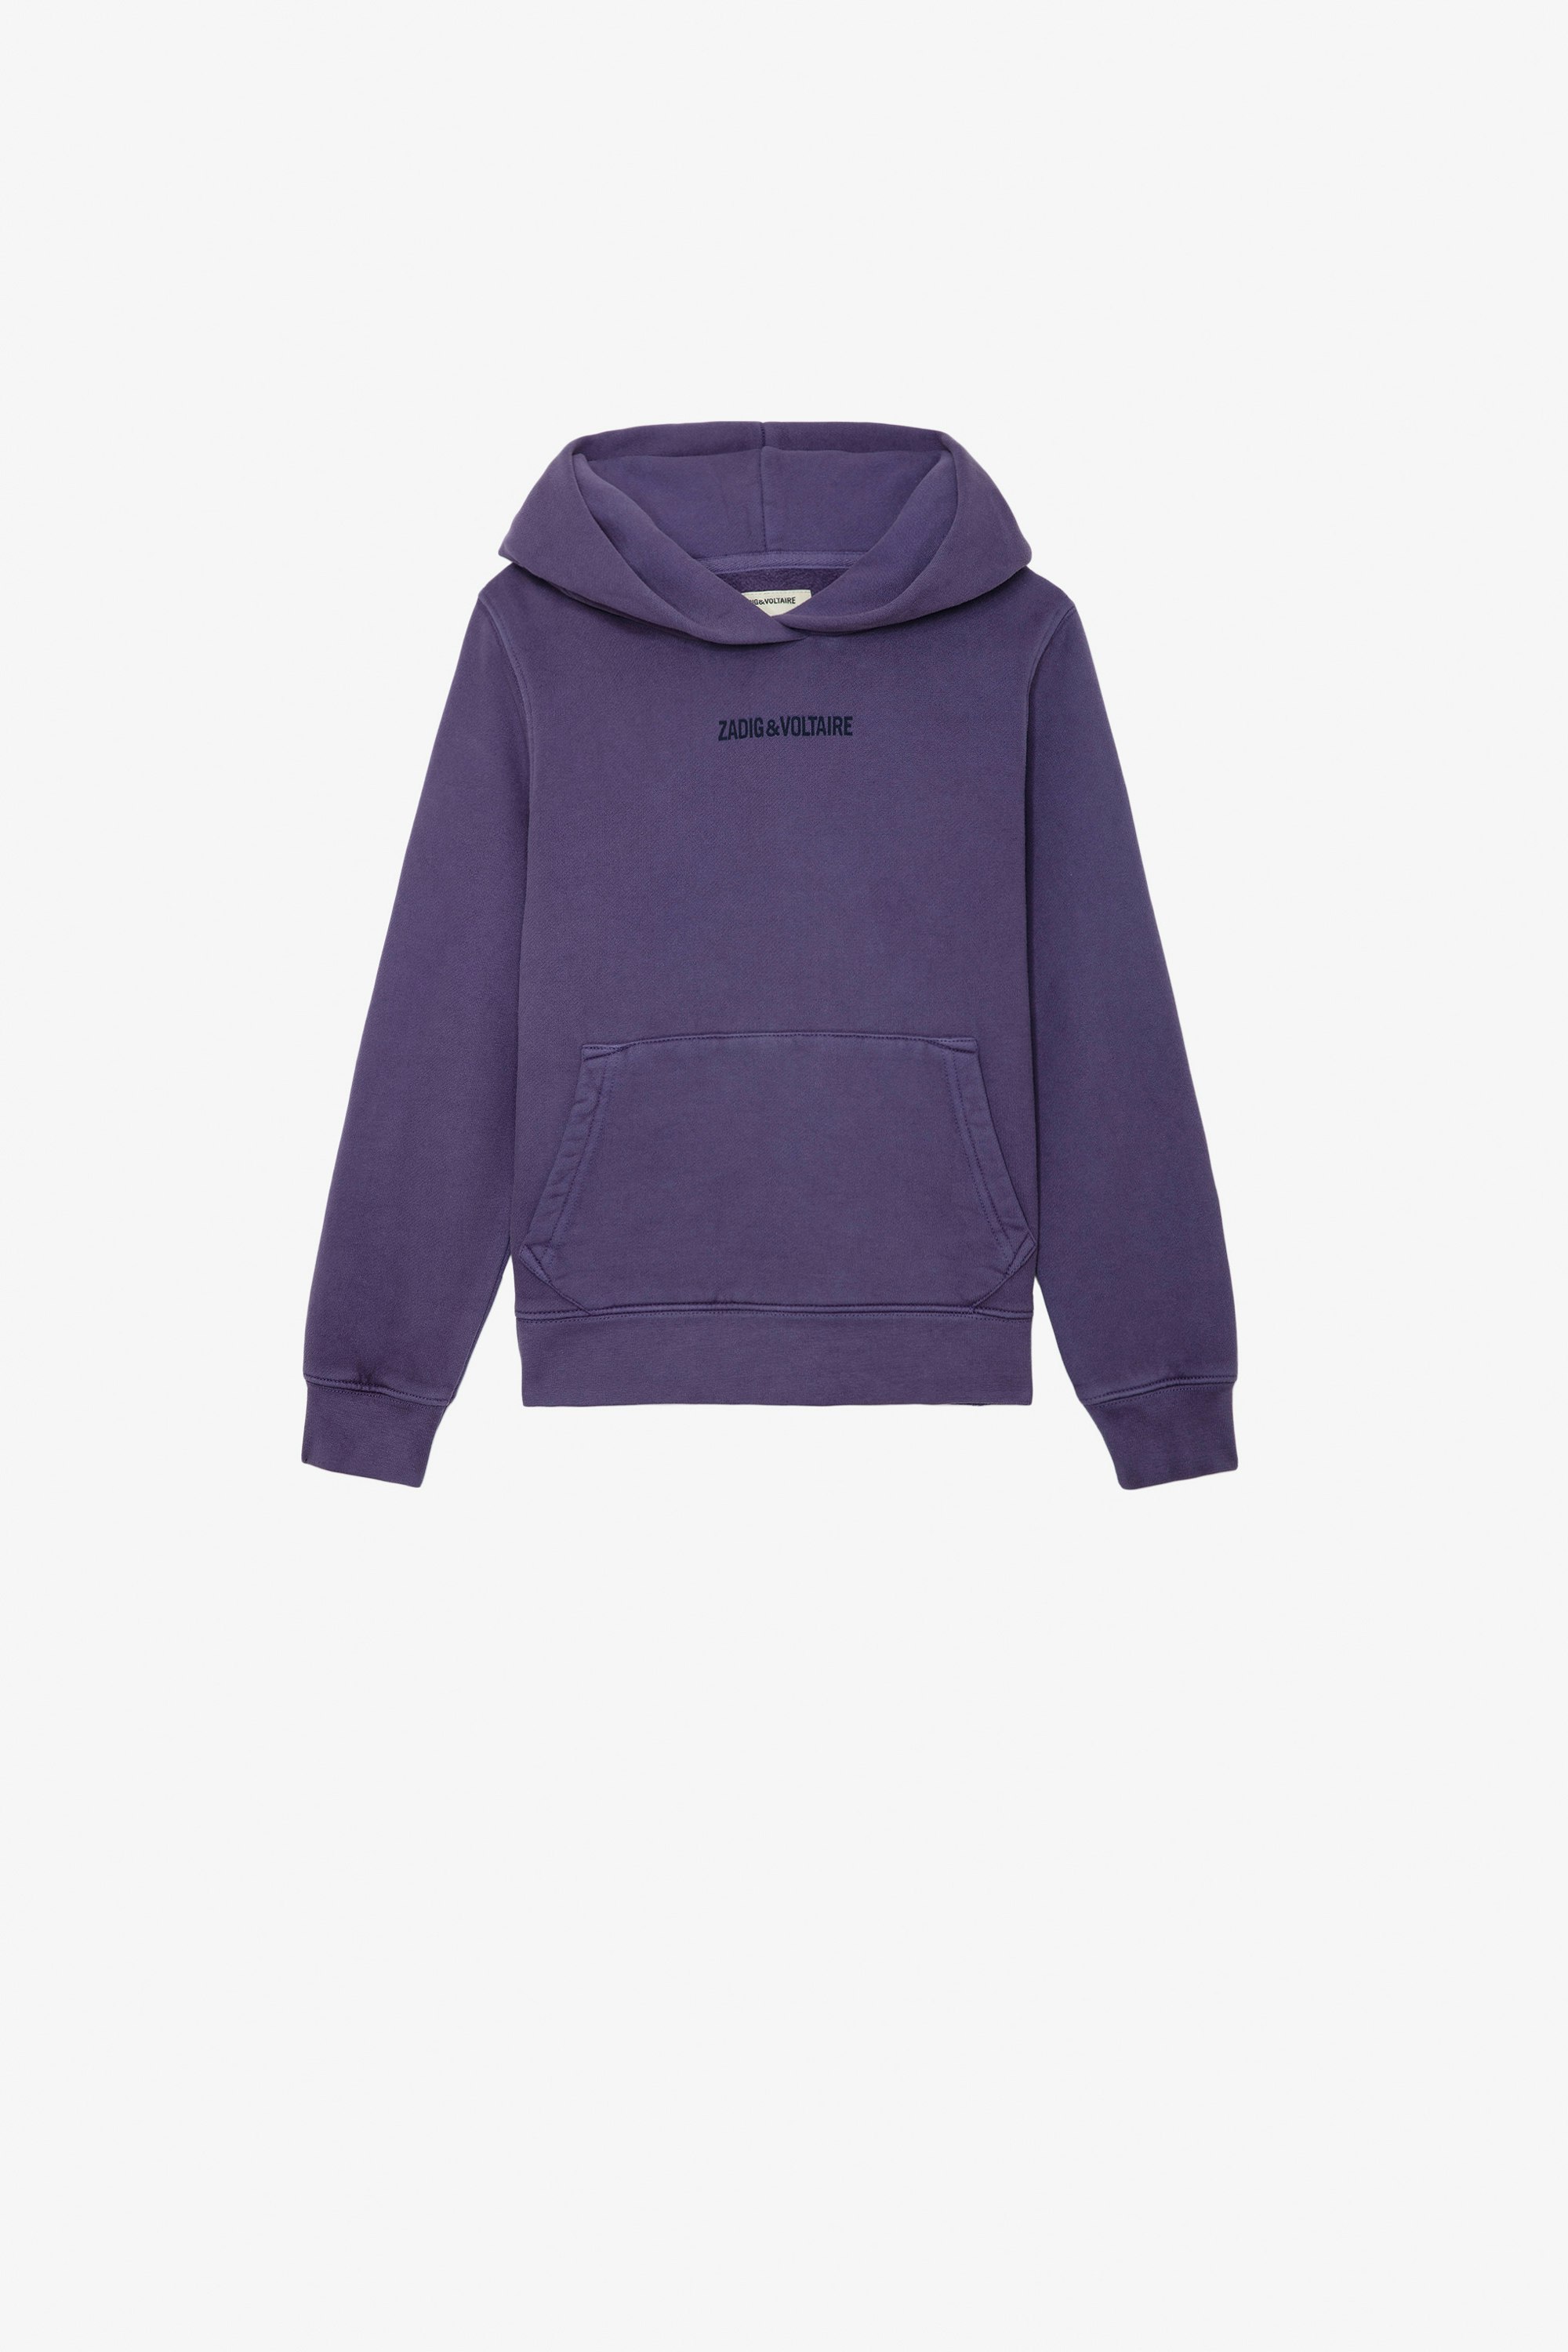 Sanchi Boys’ Sweatshirt - Boys’ purple cotton fleece hoodie with illustrations.